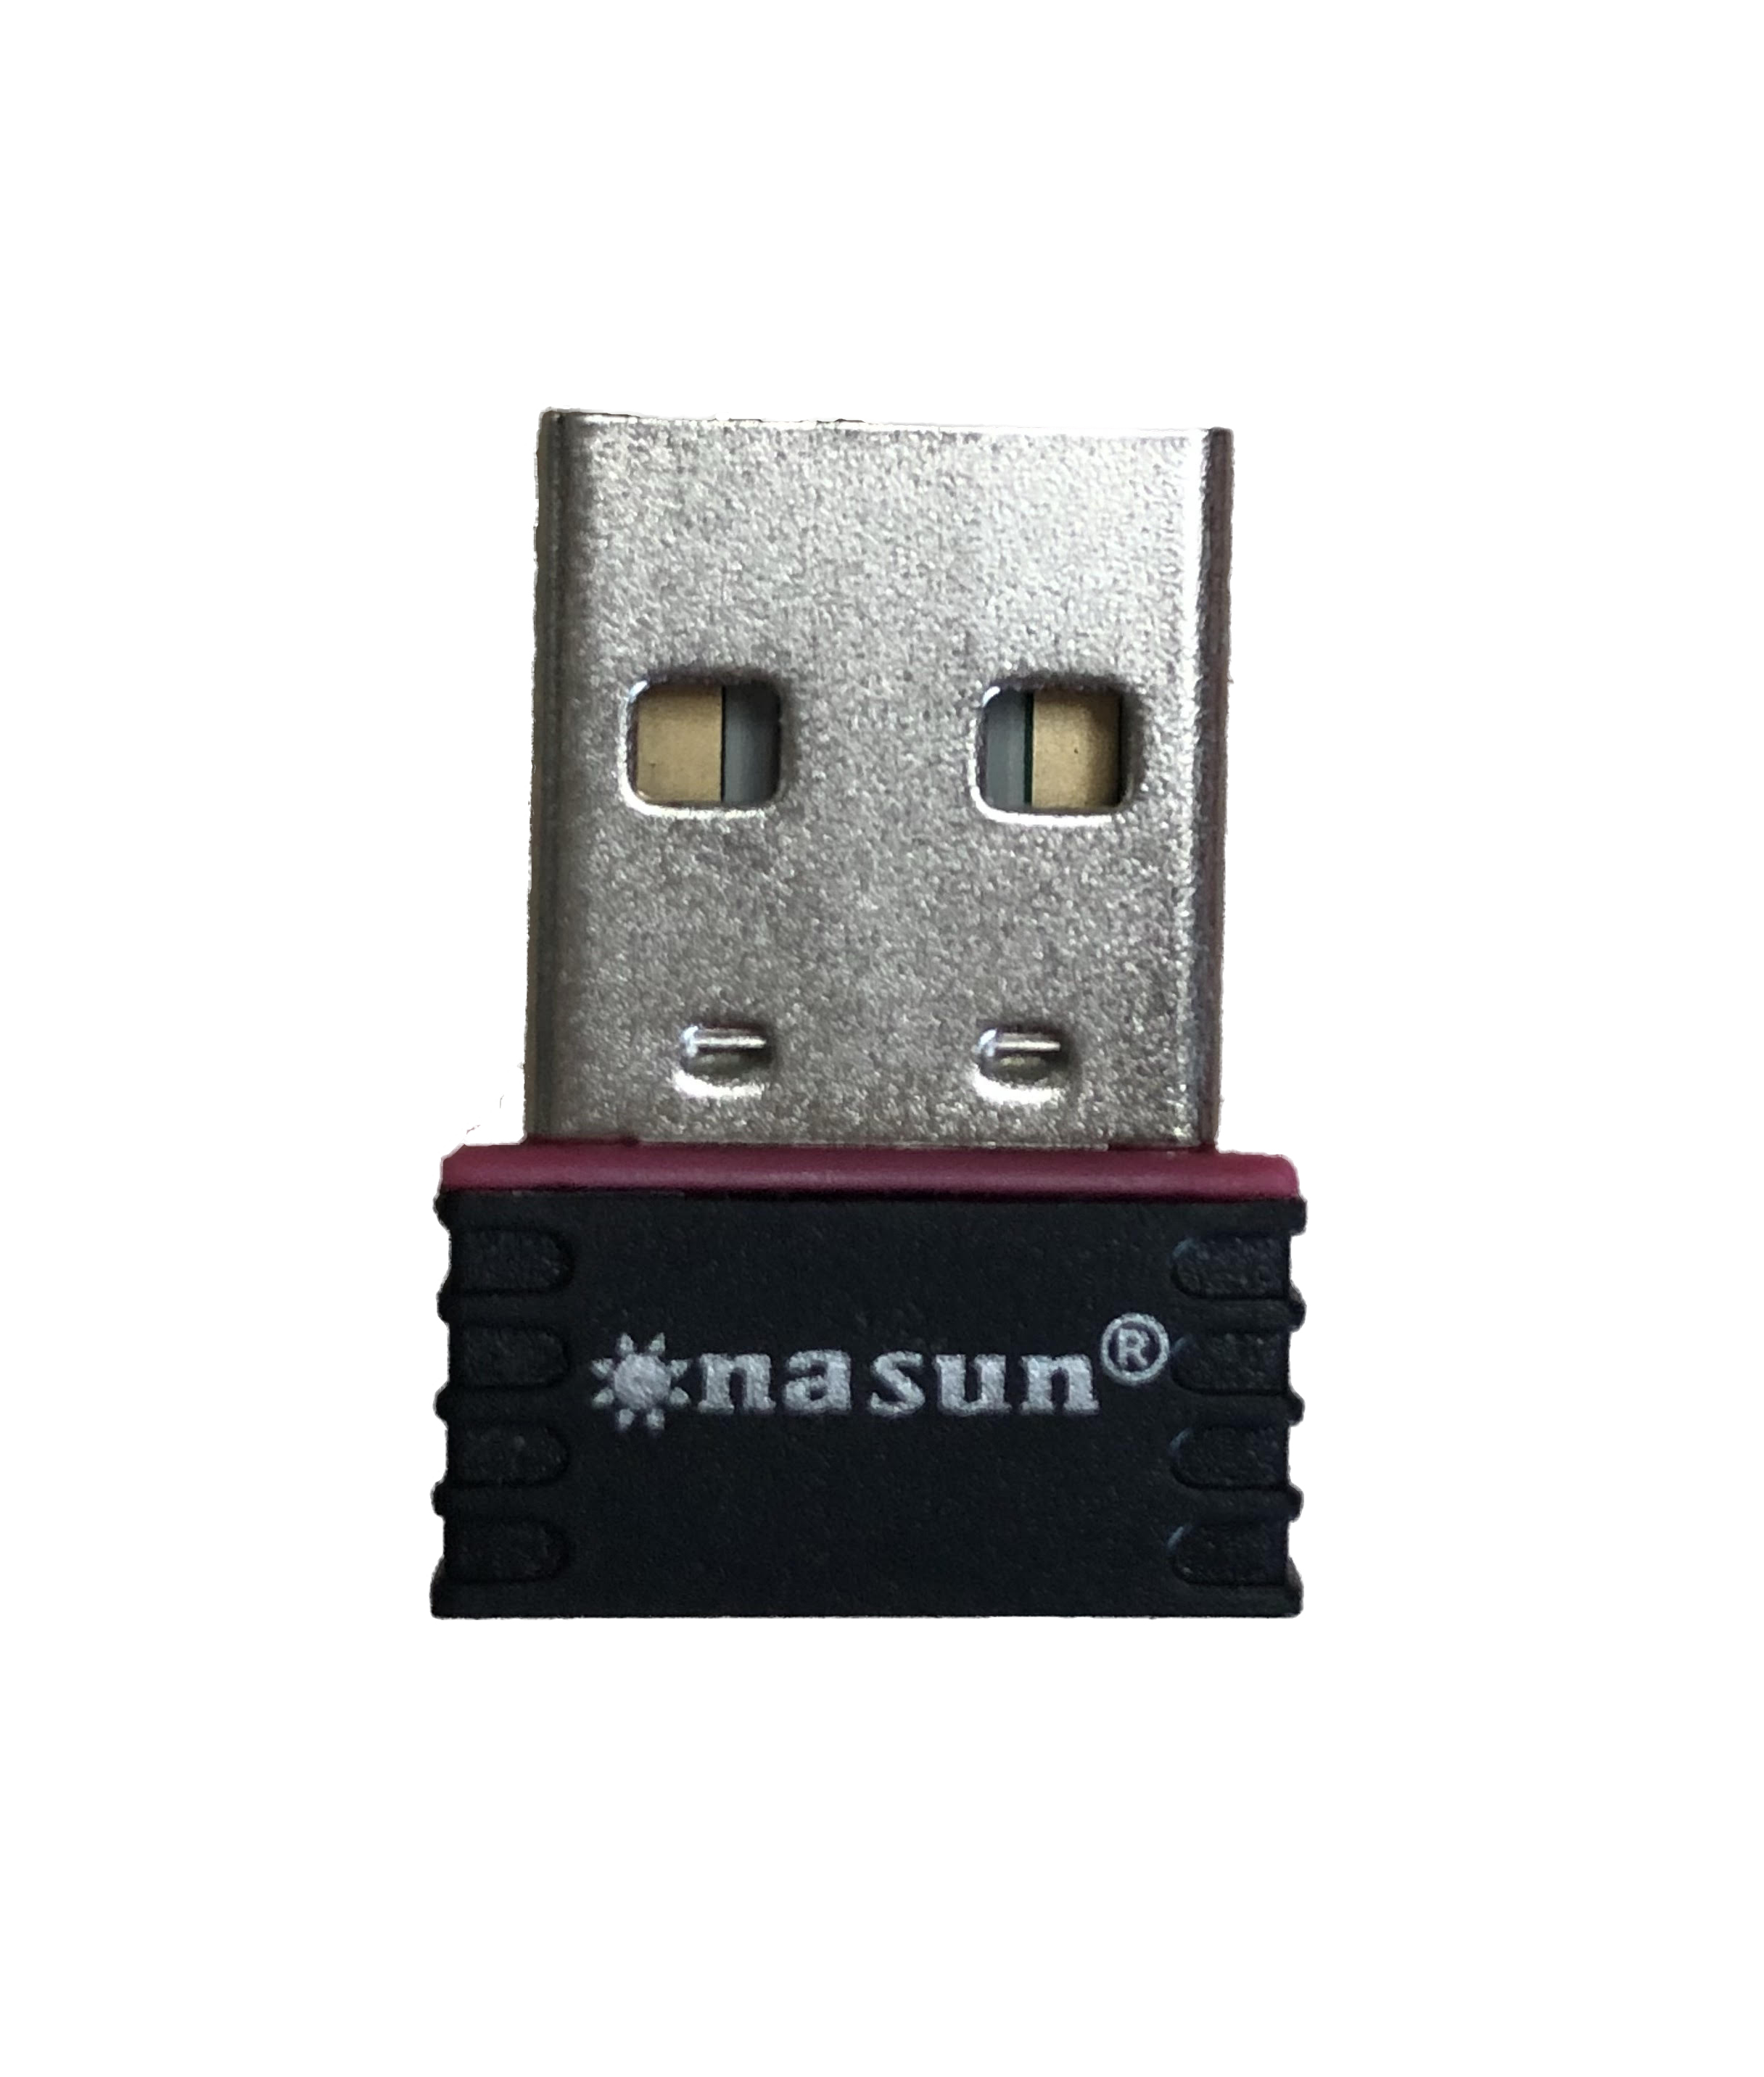 USB Wifi NASUN NS-730, 150mb